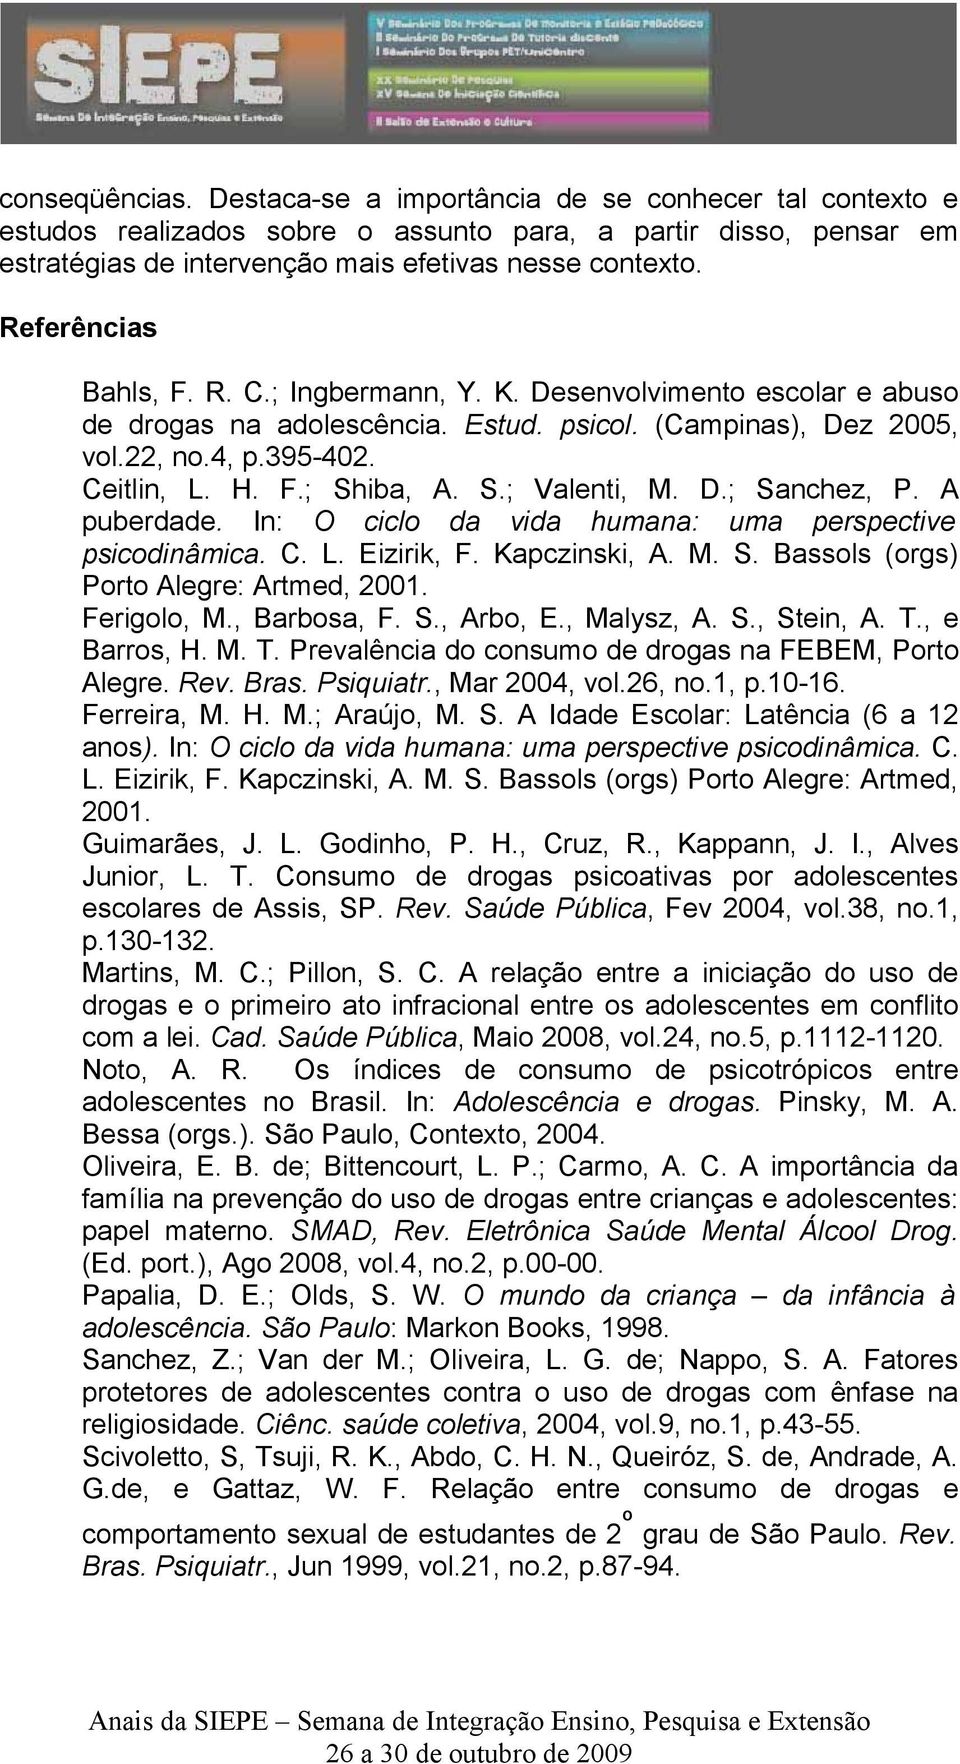 iba, A. S.; Valenti, M. D.; Sanchez, P. A puberdade. In: O ciclo da vida humana: uma perspective psicodinâmica. C. L. Eizirik, F. Kapczinski, A. M. S. Bassols (orgs) Porto Alegre: Artmed, 2001.